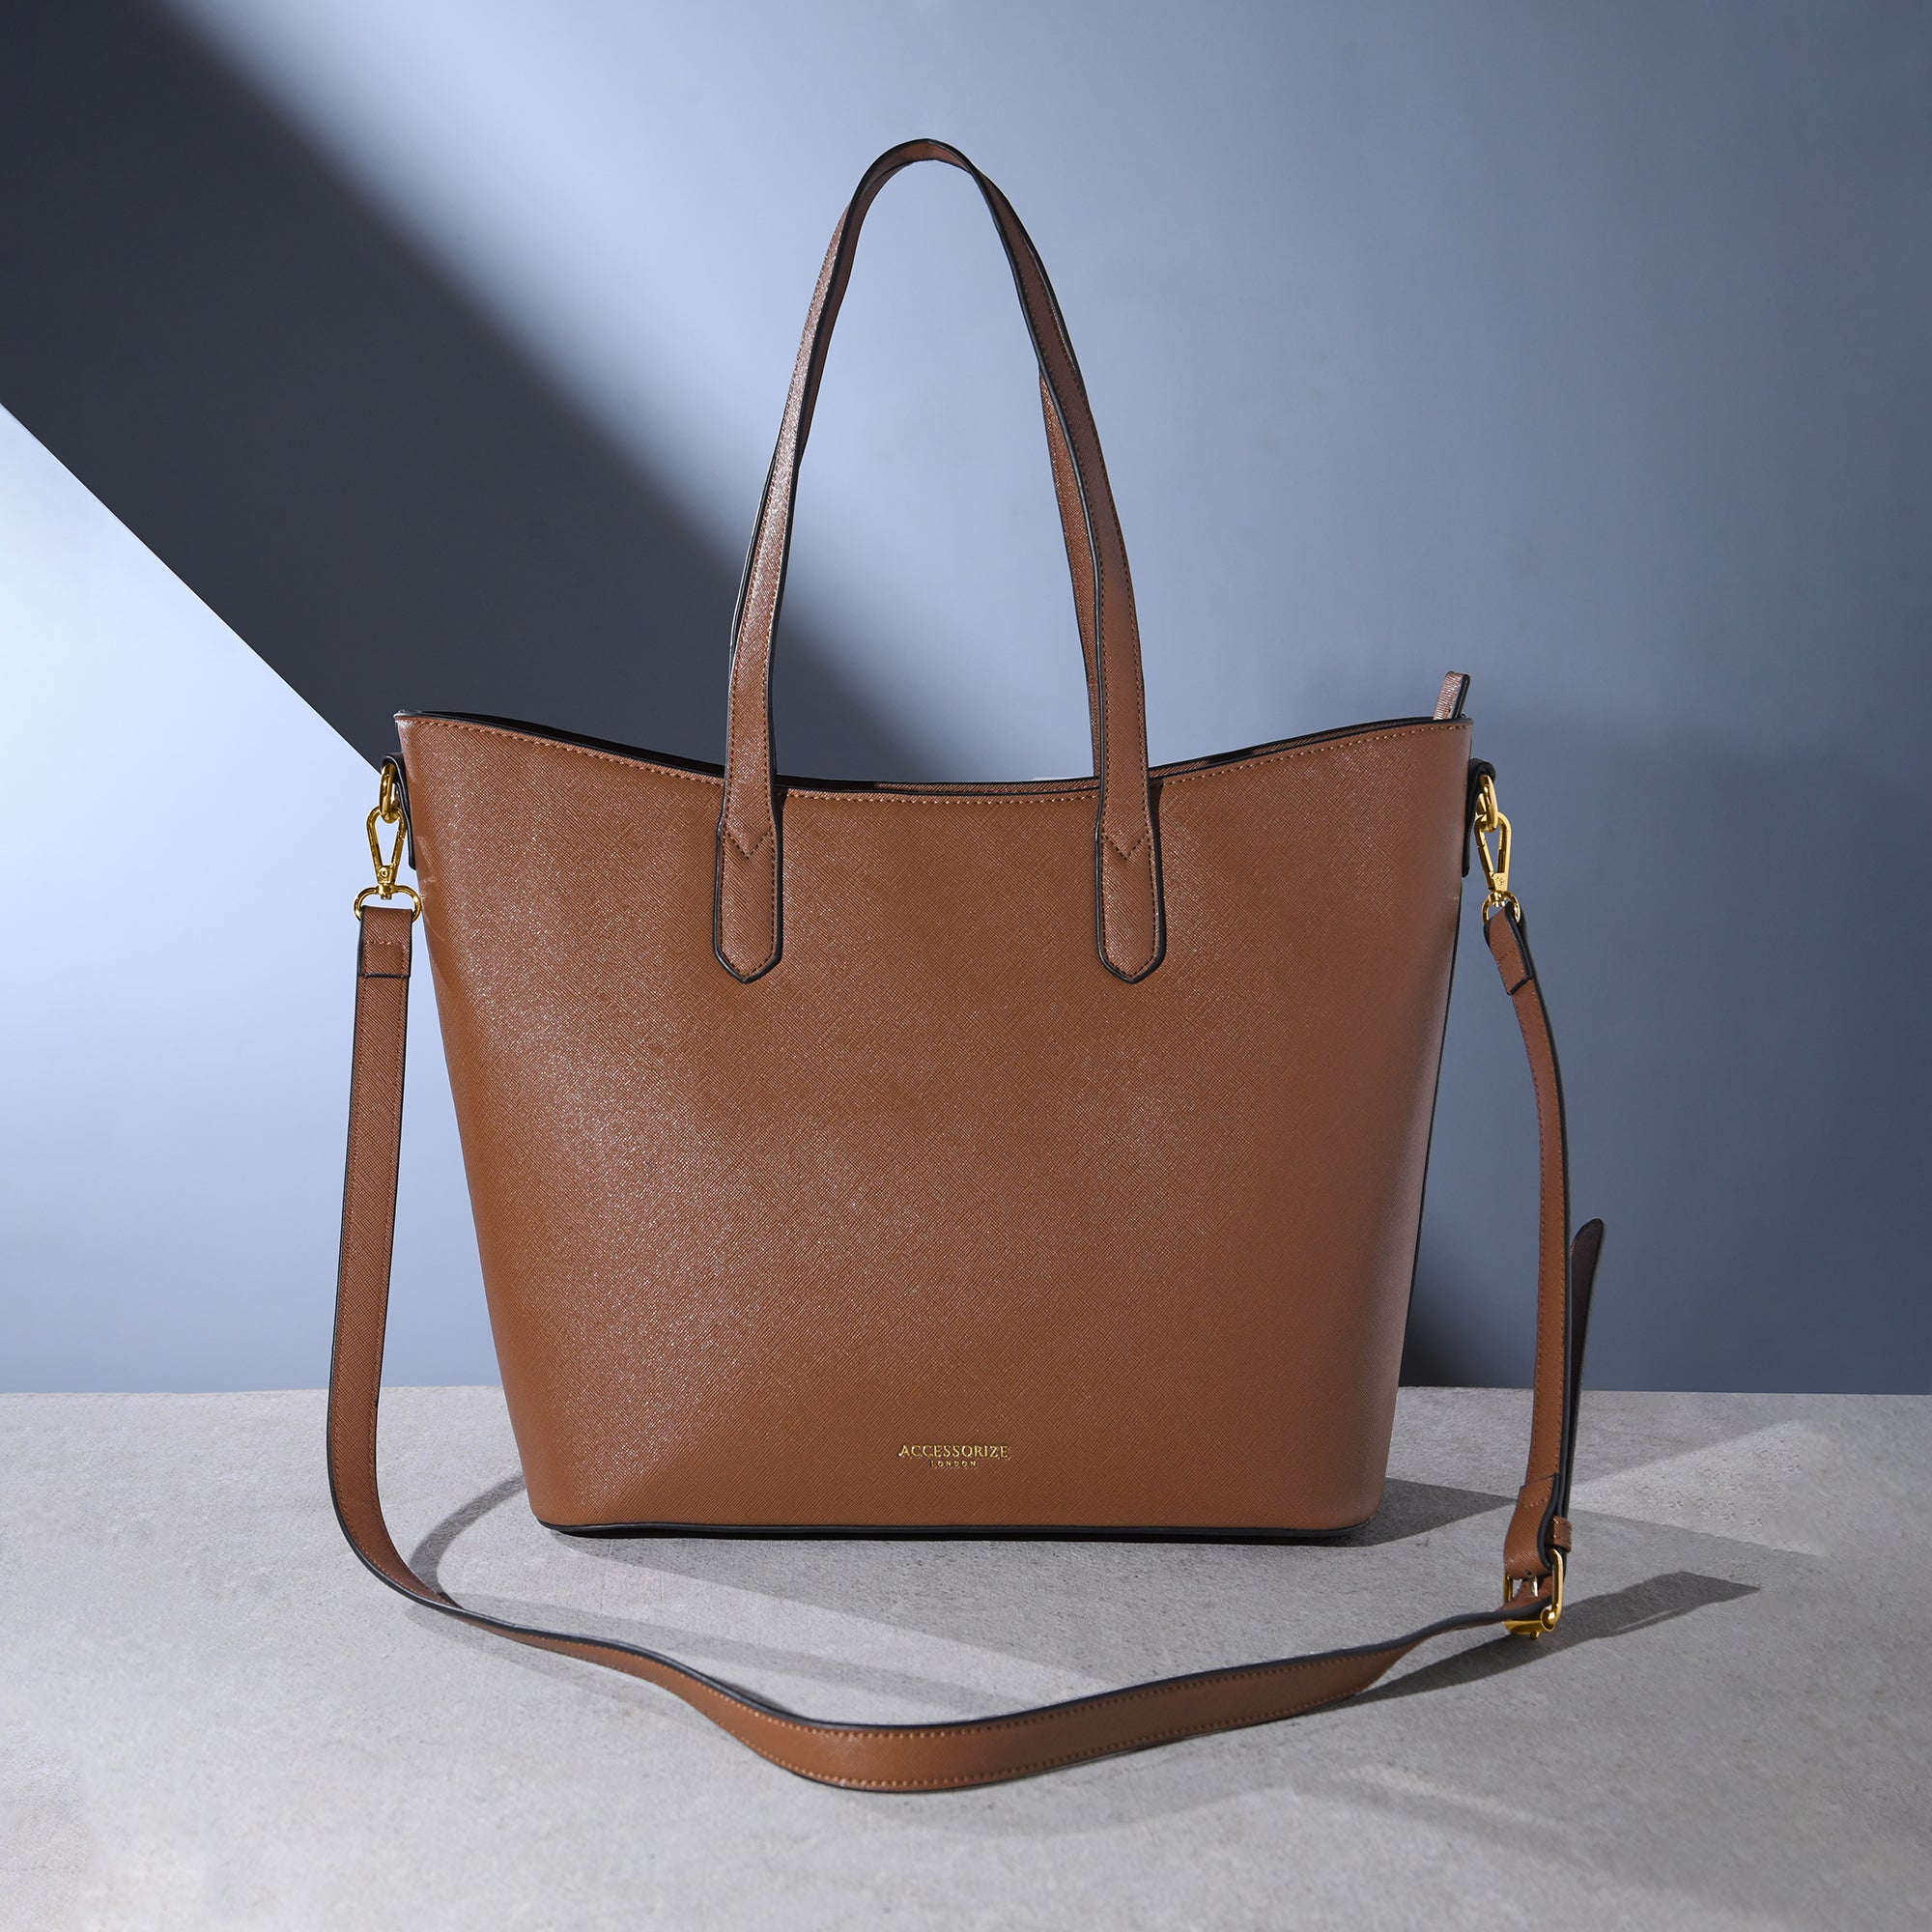 Accessorize London Women's Faux Leather Tan Daffodil tote bag